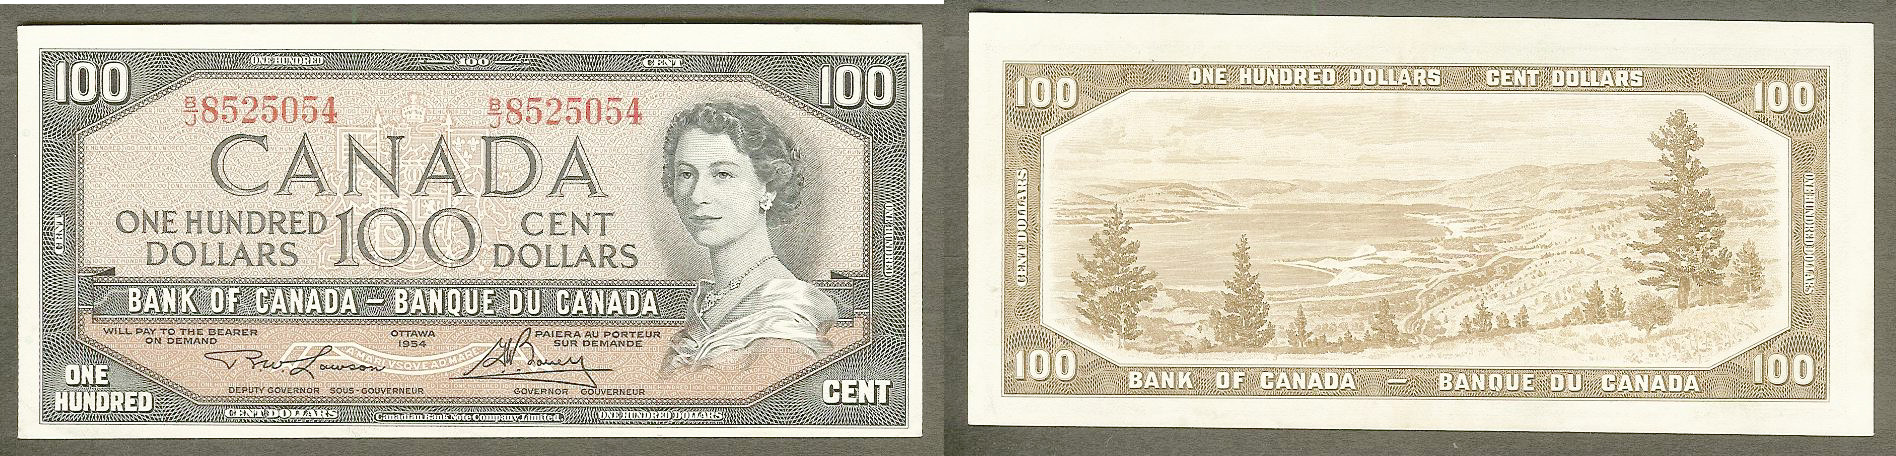 Canada $100 1954 Lawson/Bouey Unc